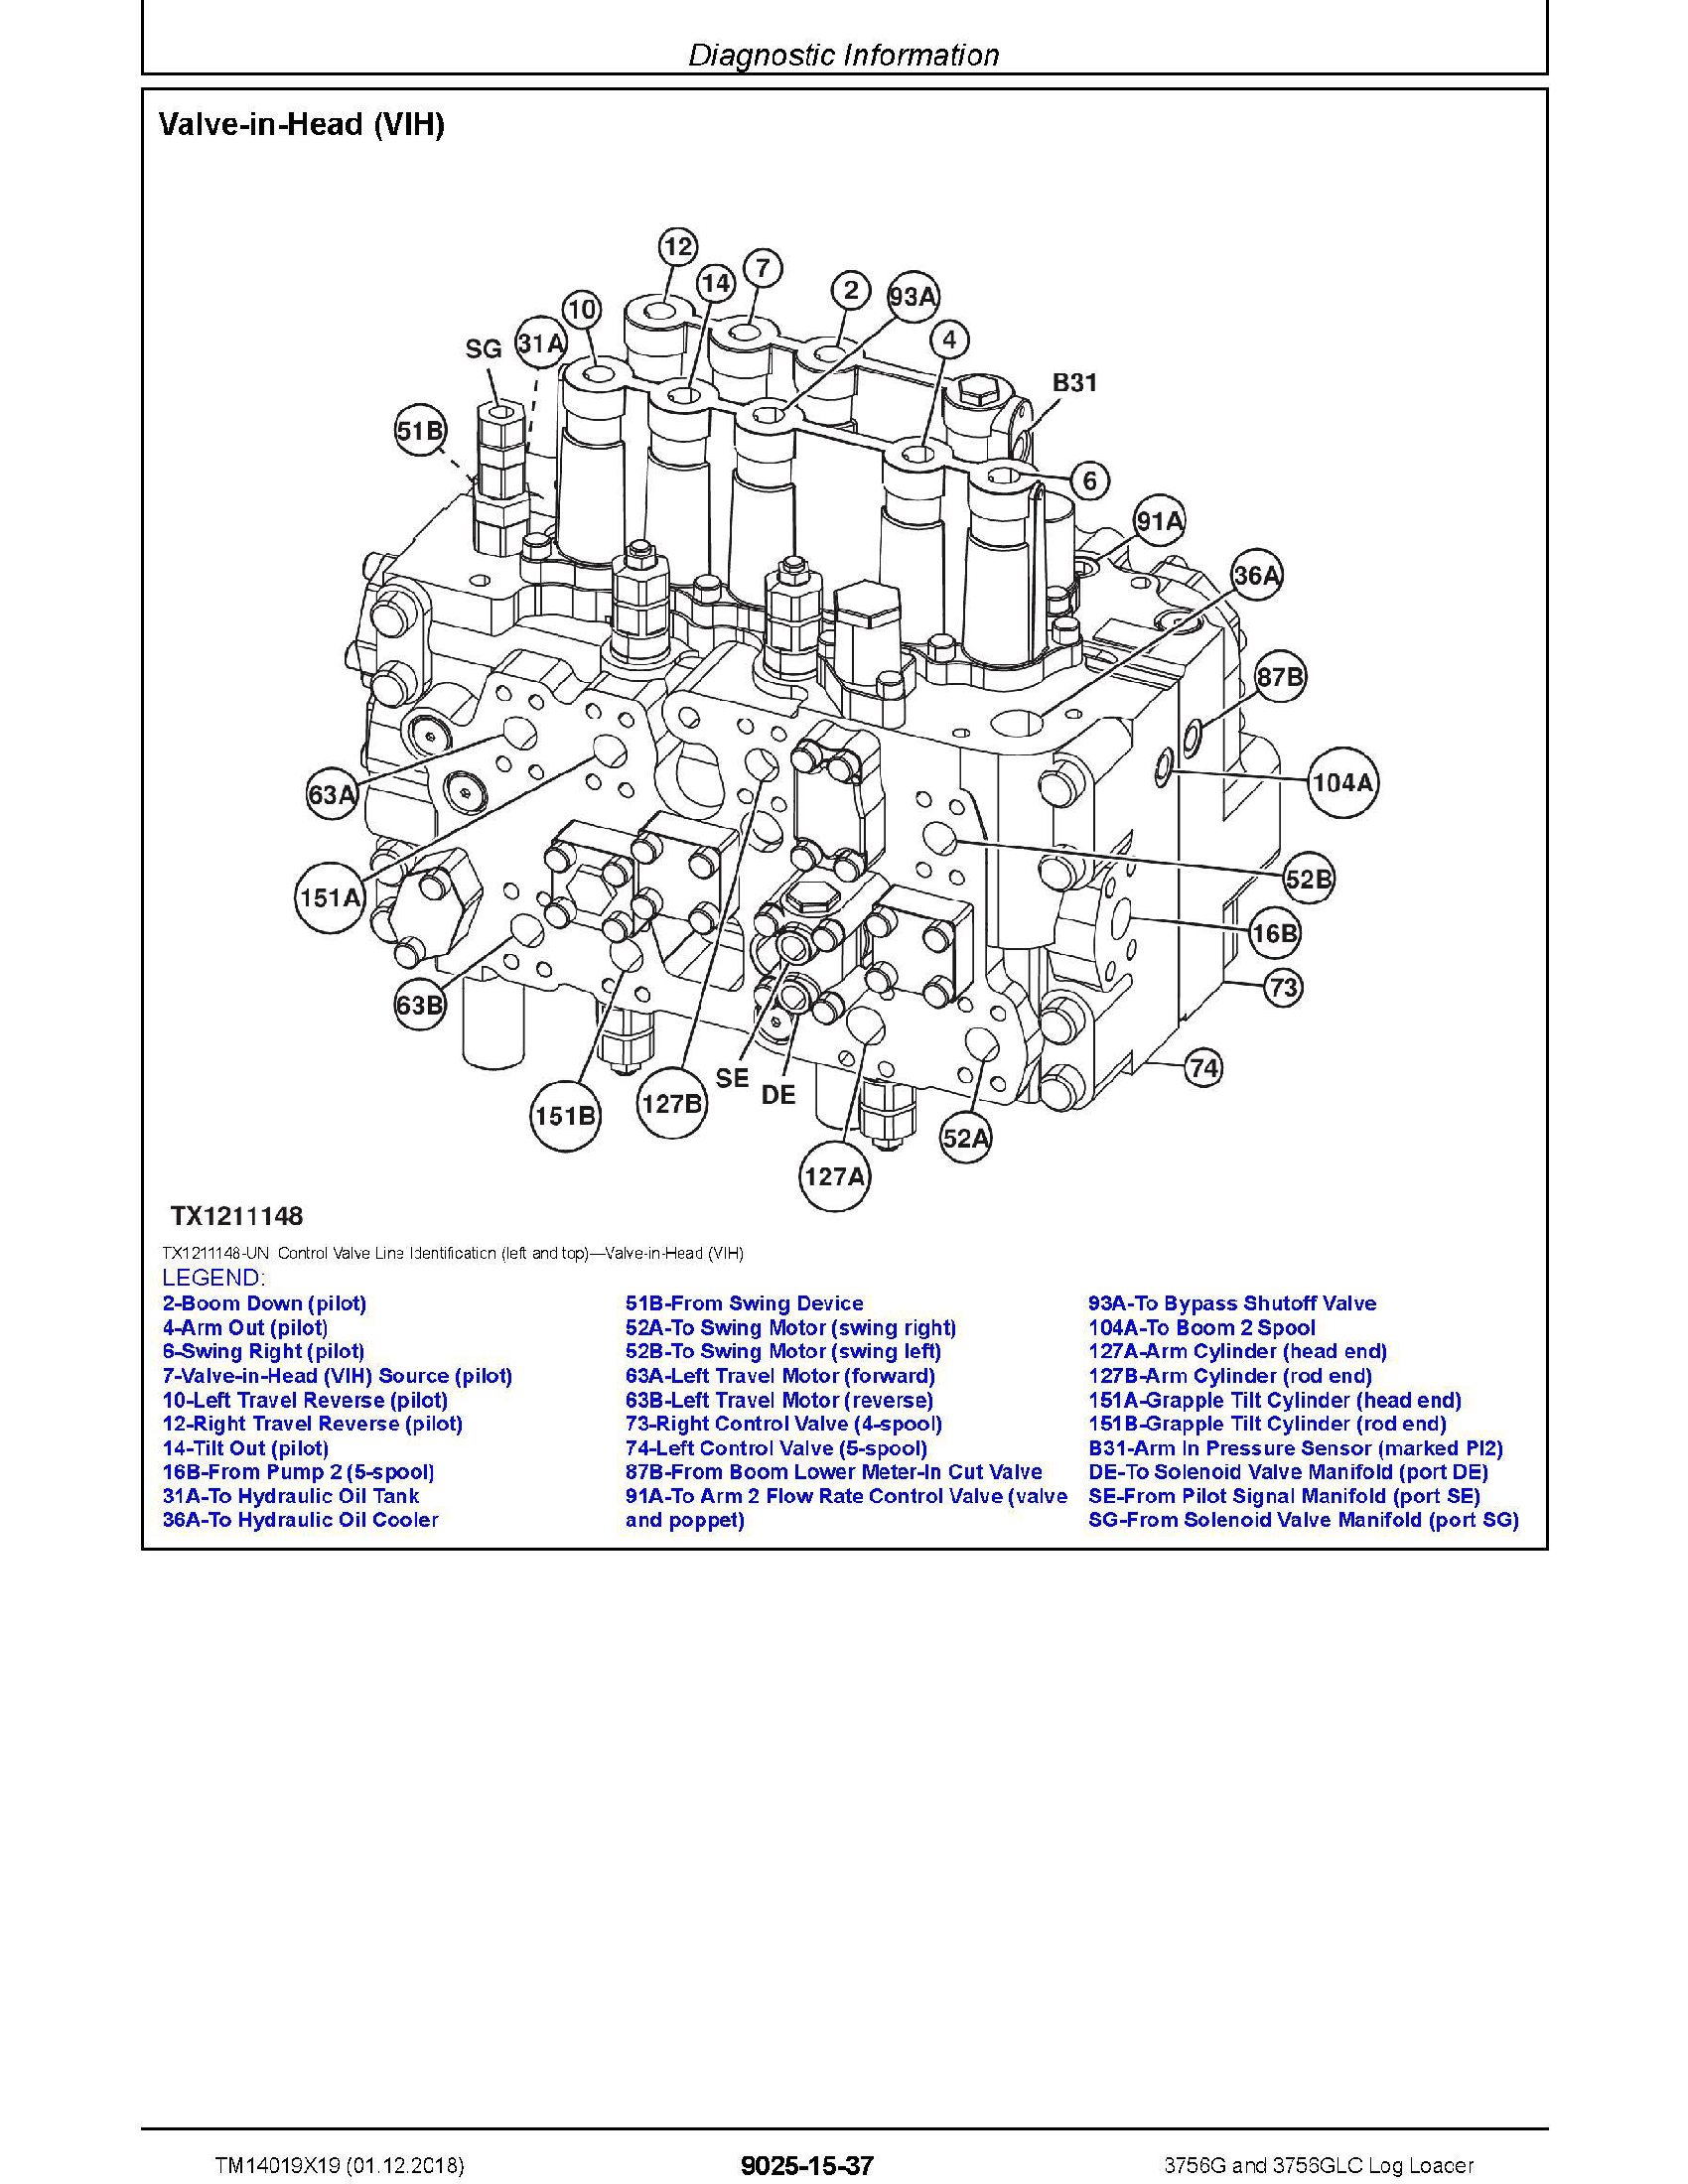 John Deere 762B manual pdf